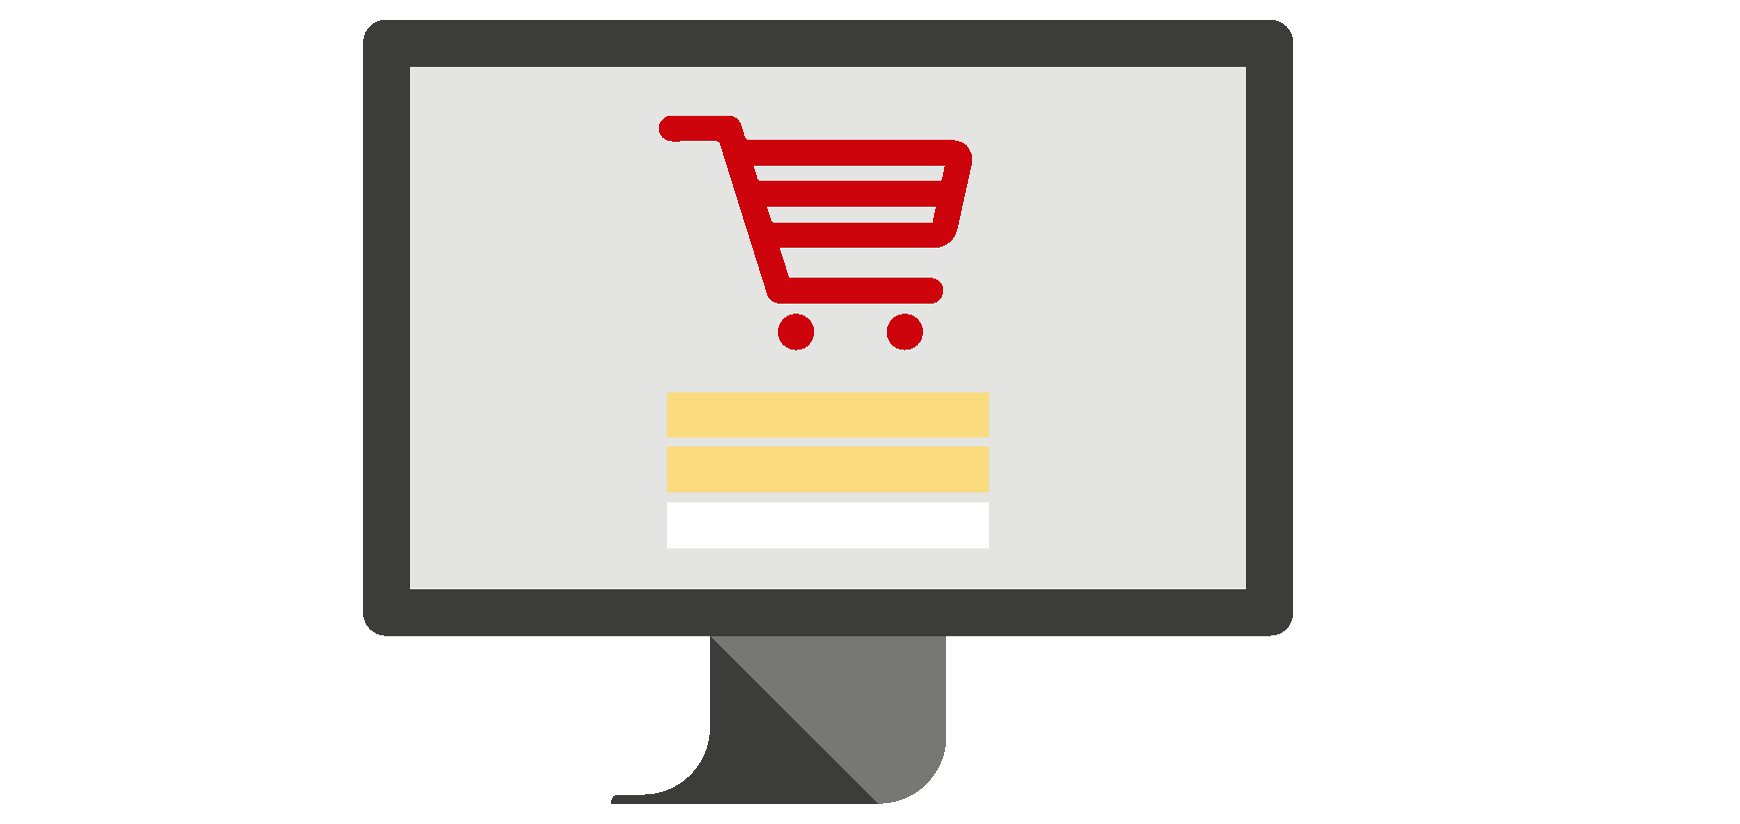 Shopping cart on computer screen